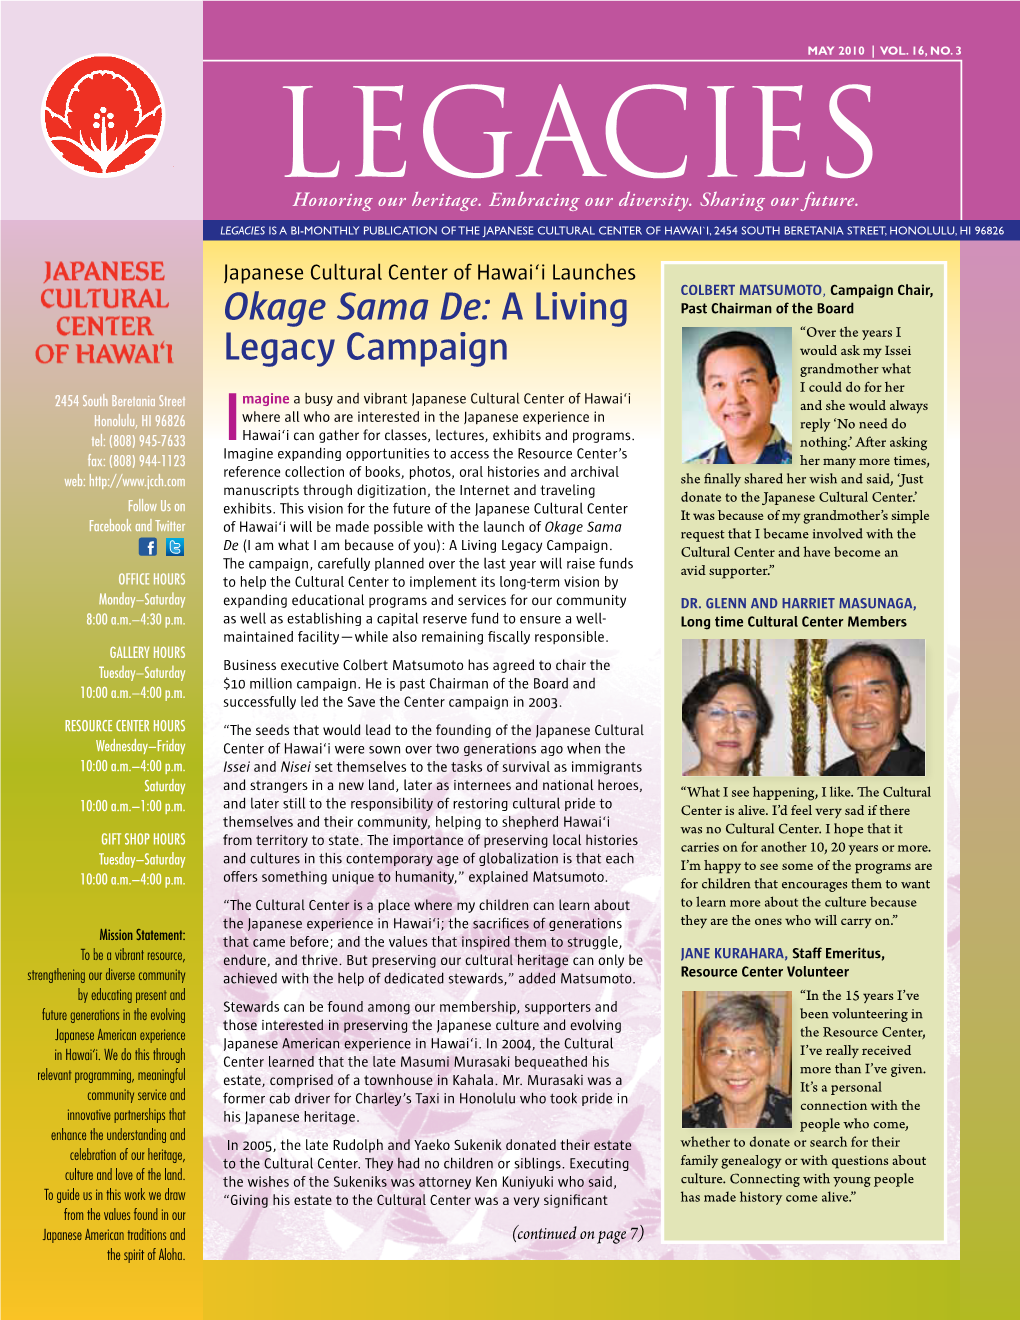 Okage Sama De: a Living Legacy Campaign